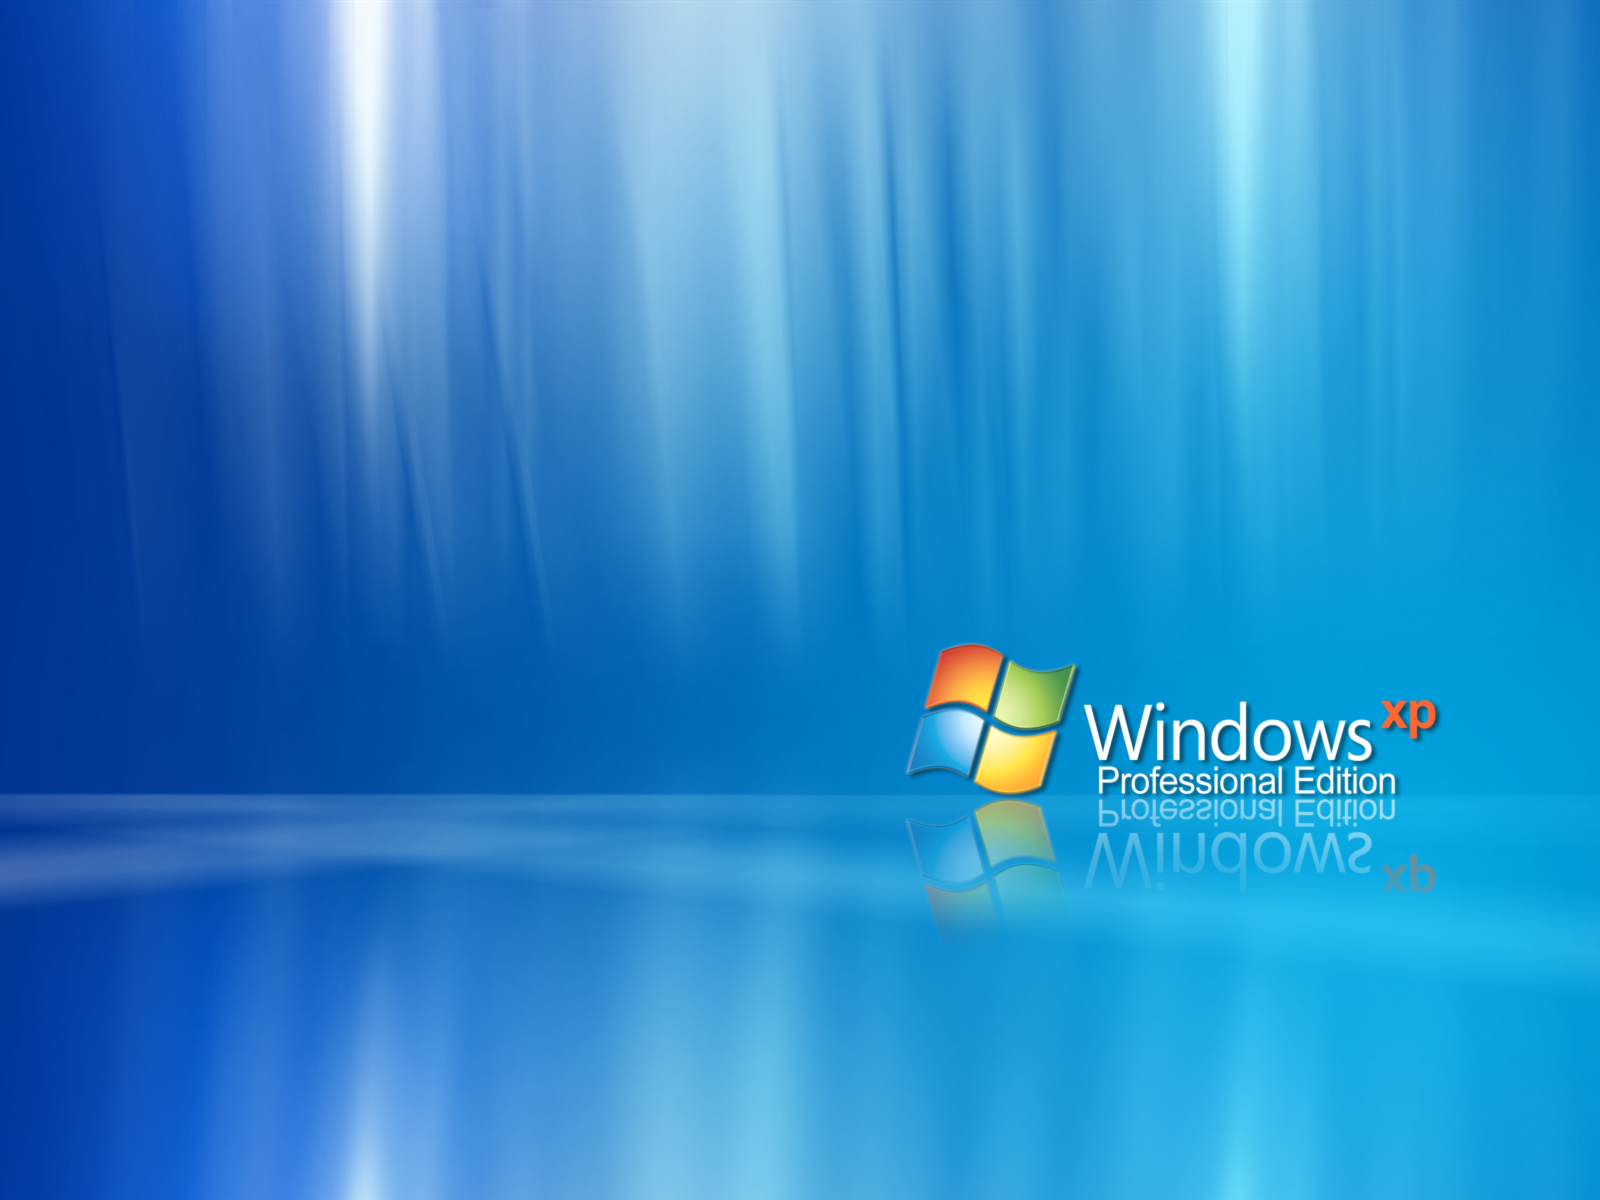 Windows Xp Wallpaper Technolamp